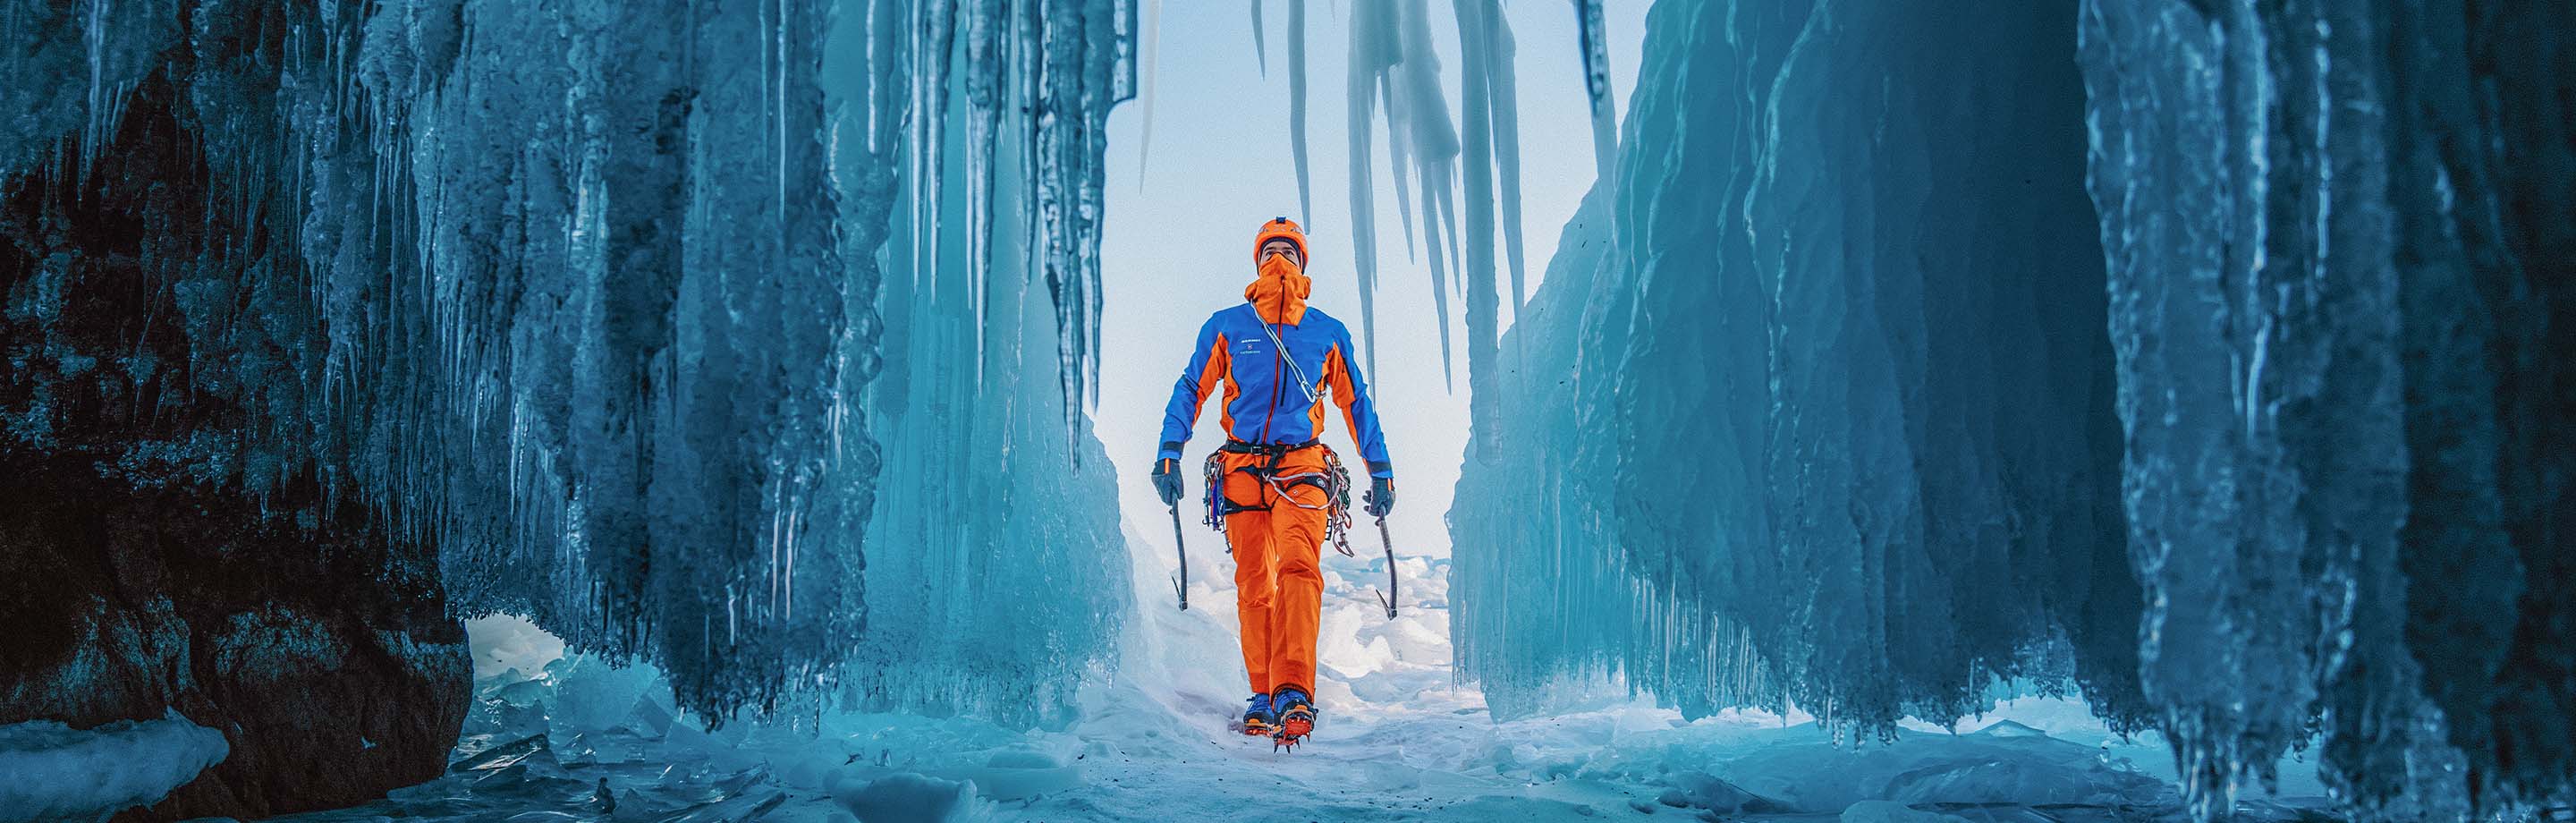 Mammut Eiger Extreme - bergsportkleding en -uitrusting voor professionele outdoorsporters